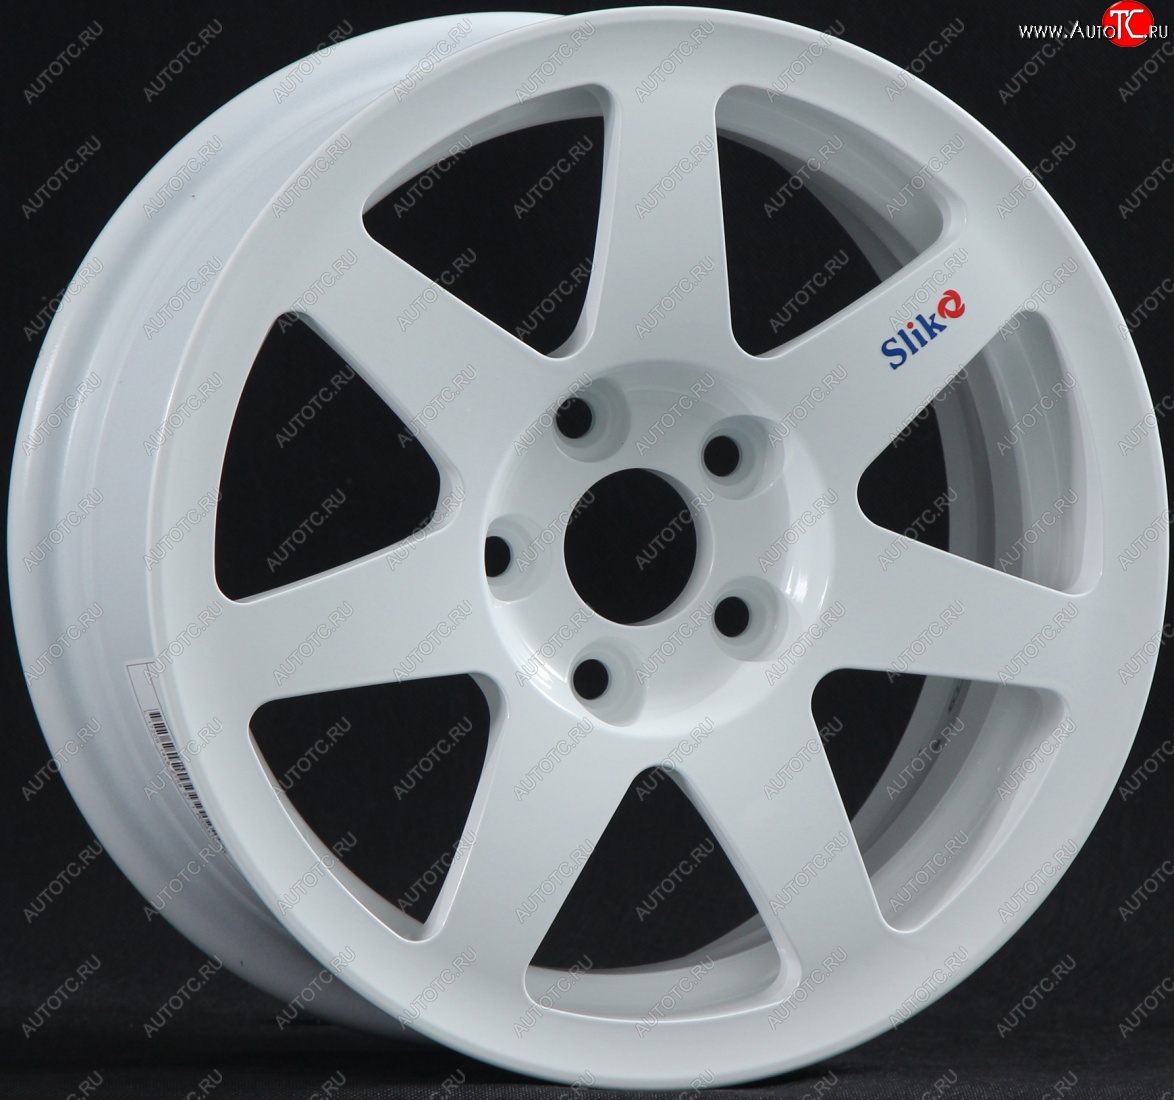 12 199 р. Кованый диск Slik Classik 6x14 (Белый) Hyundai Avante (2000-2006) 4x114.3xDIA67.1xET39.0 (Цвет: Белый)